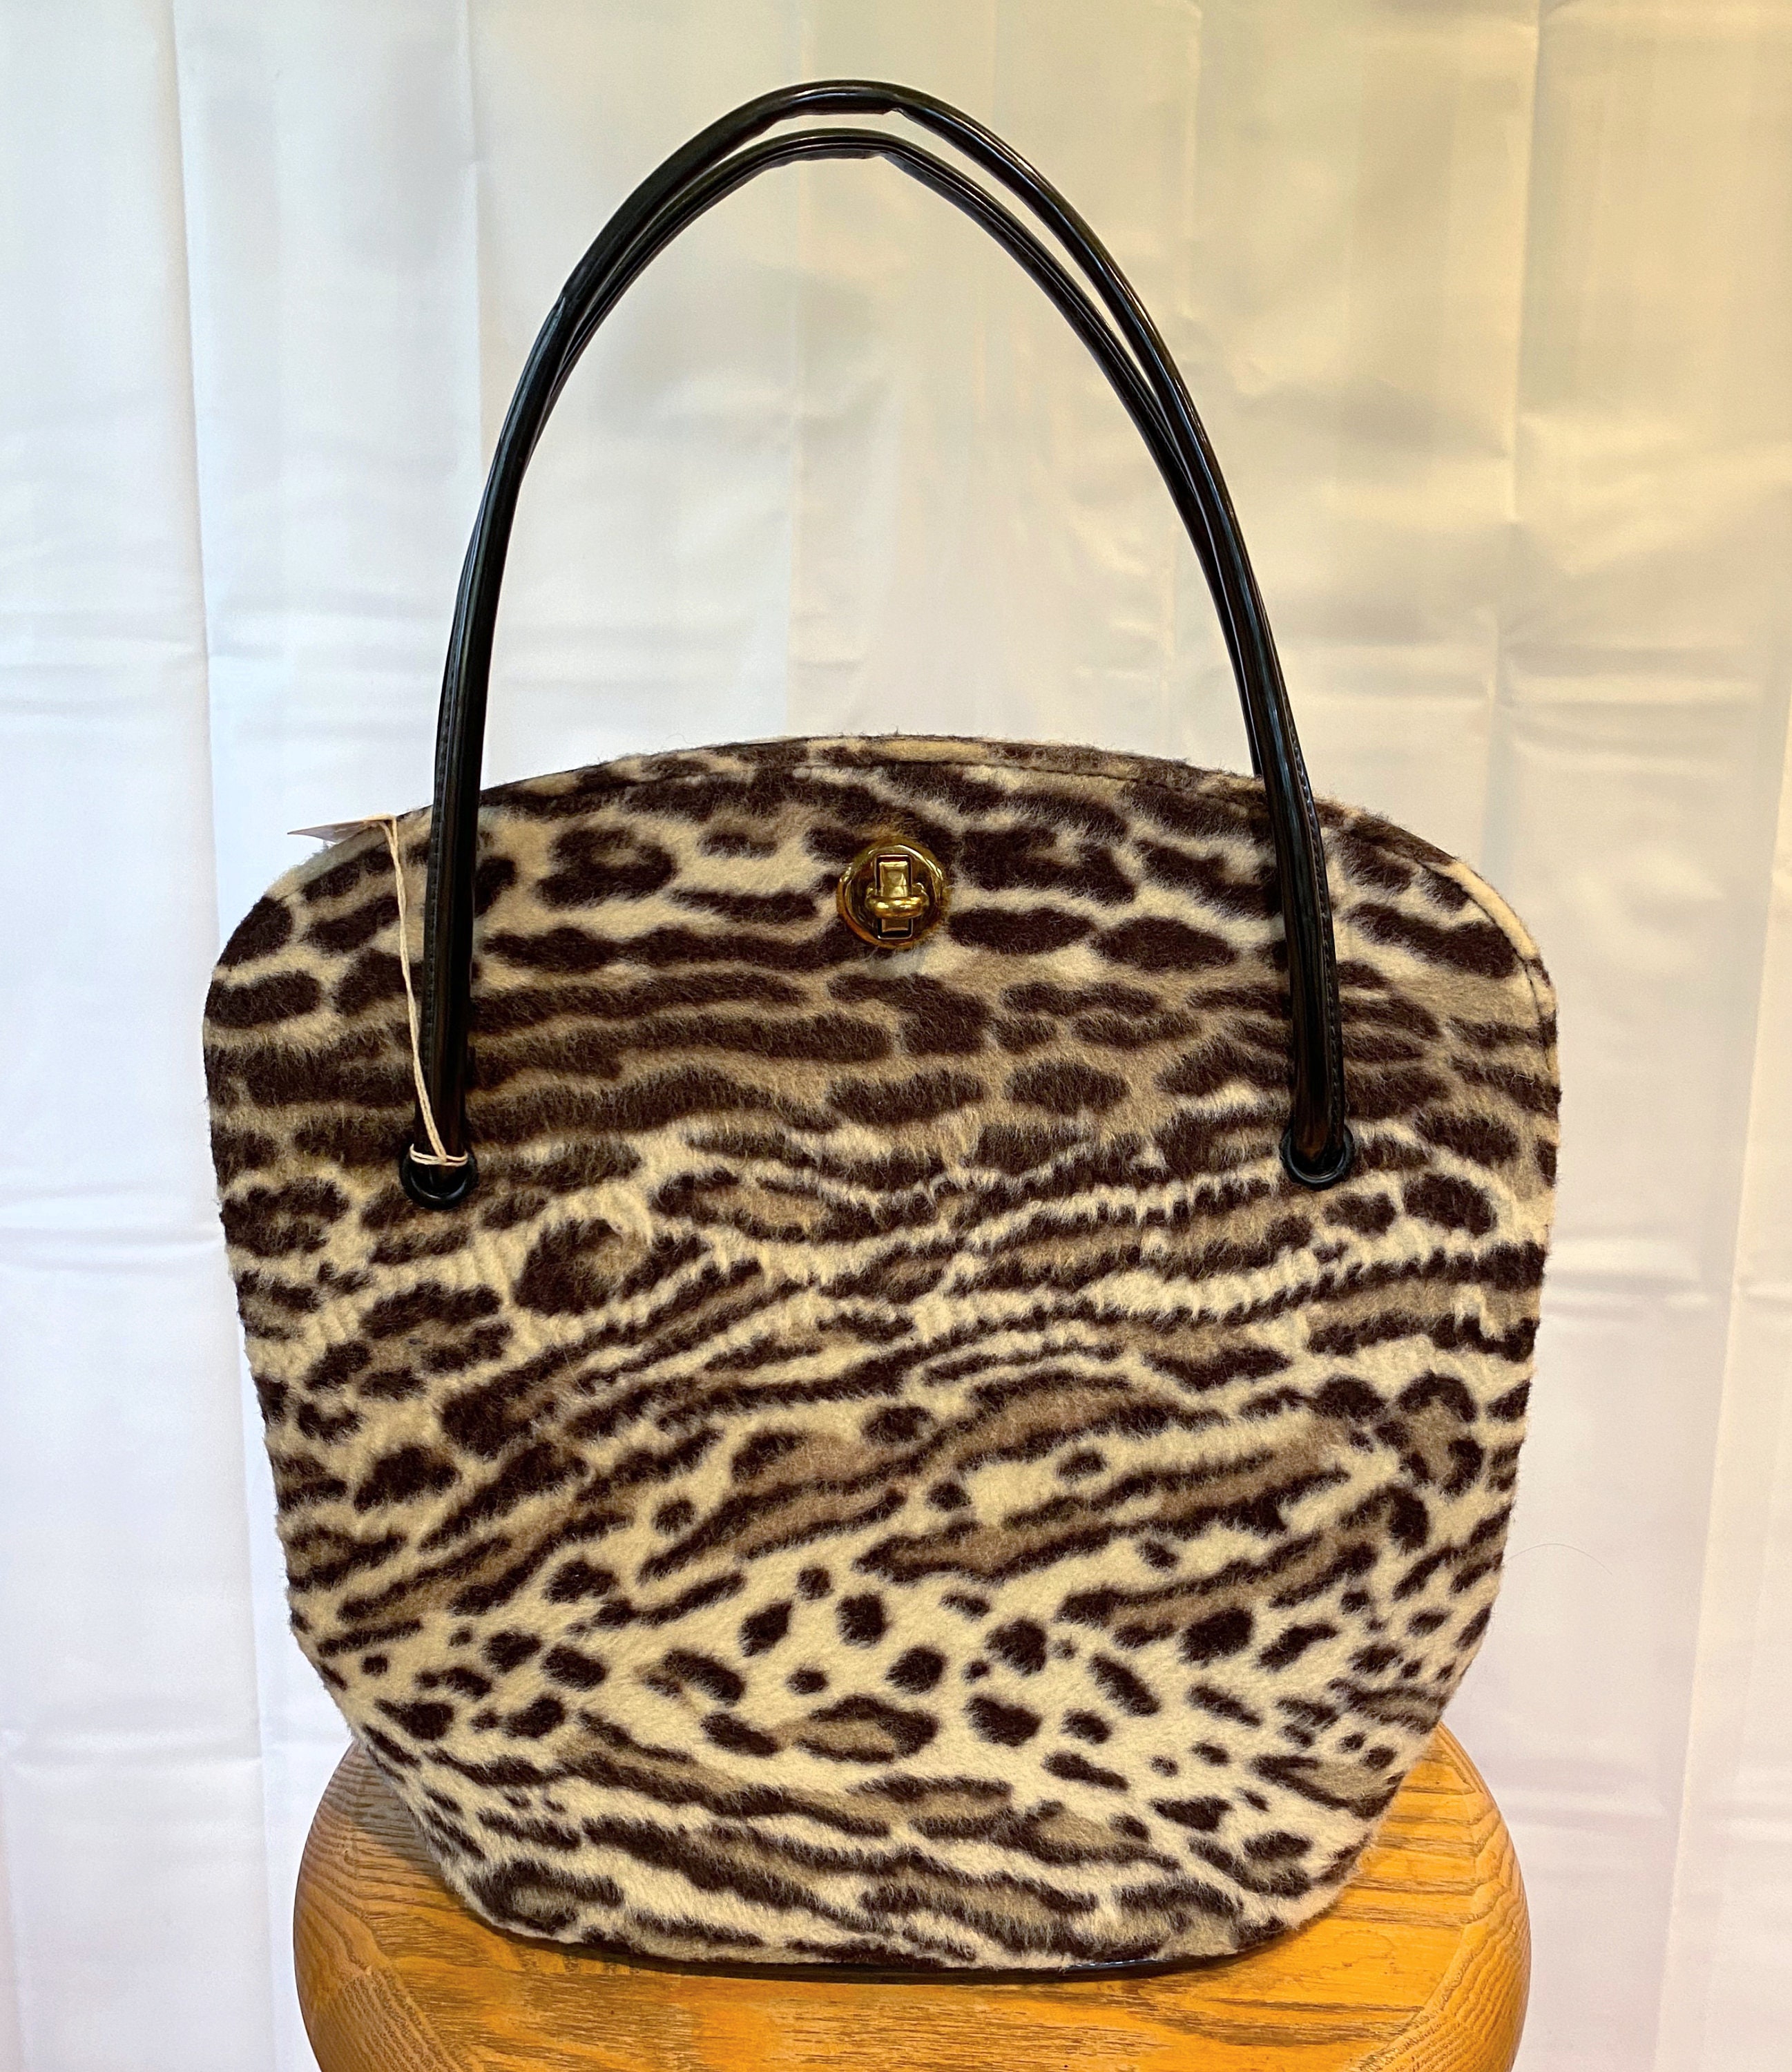 Borse e borsette Borse Borse con manici Vintage 1960s Dead Stock Purse Faux Fur Ocelot Leopard Print Handbag by Kadin Tote Style Bag Cinturini in vernice NWT NOS 